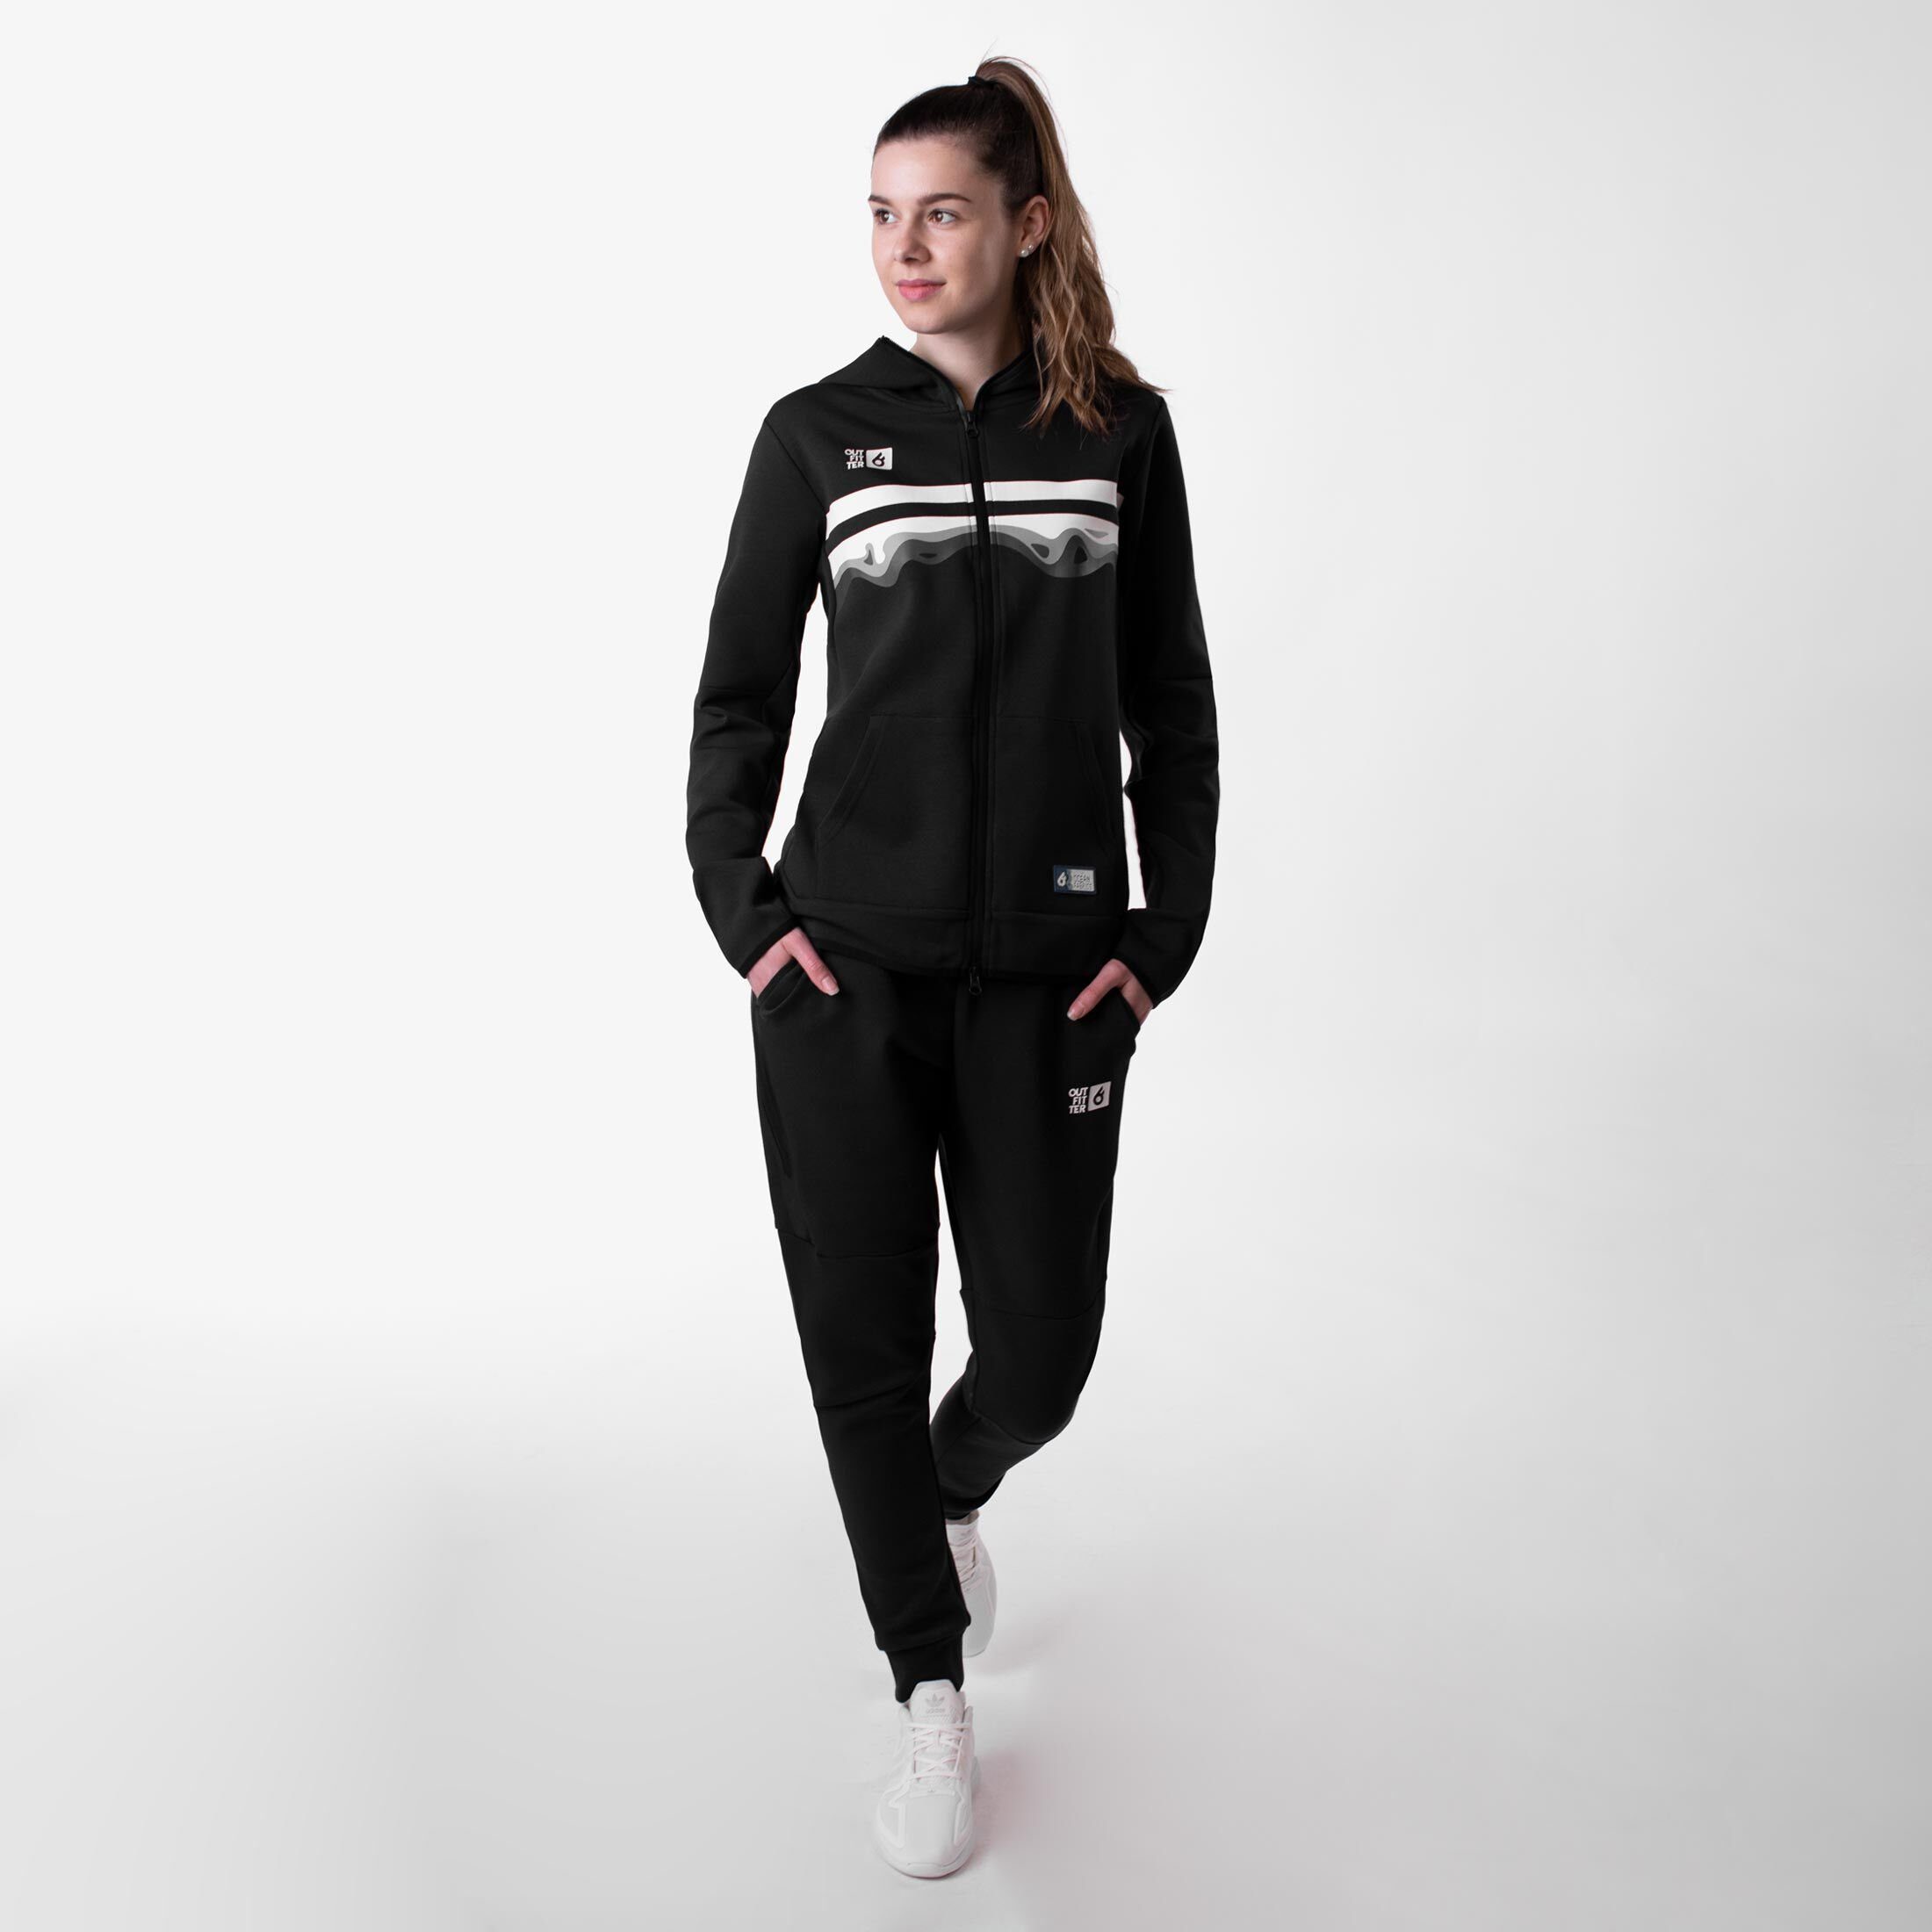 Fabrics Damen Trainingsanzug Outfitter schwarz Jogginganzug Ocean